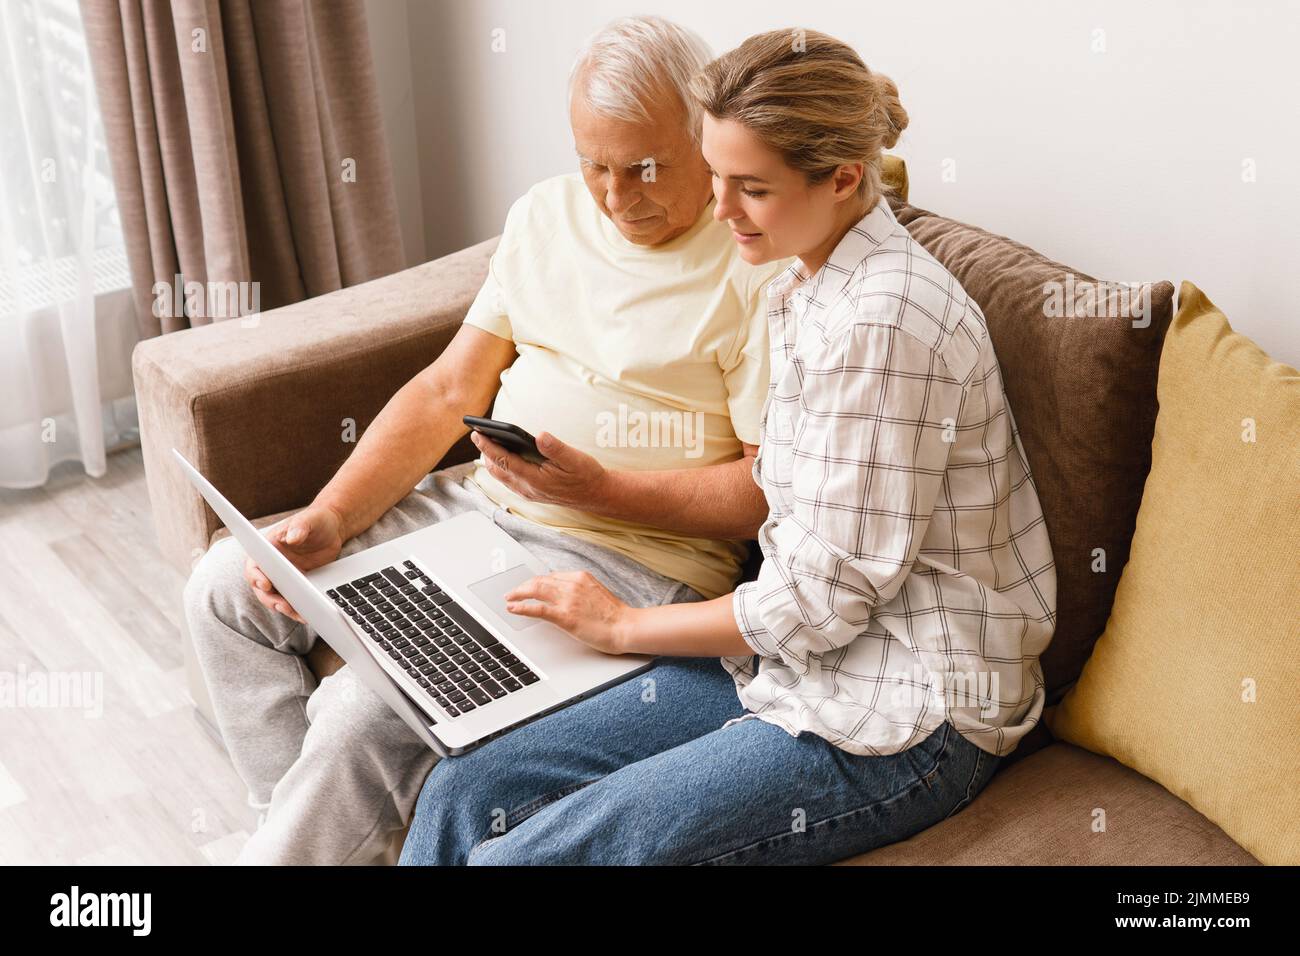 Woman explaining to elderly man how to use laptop and smatphone Stock Photo